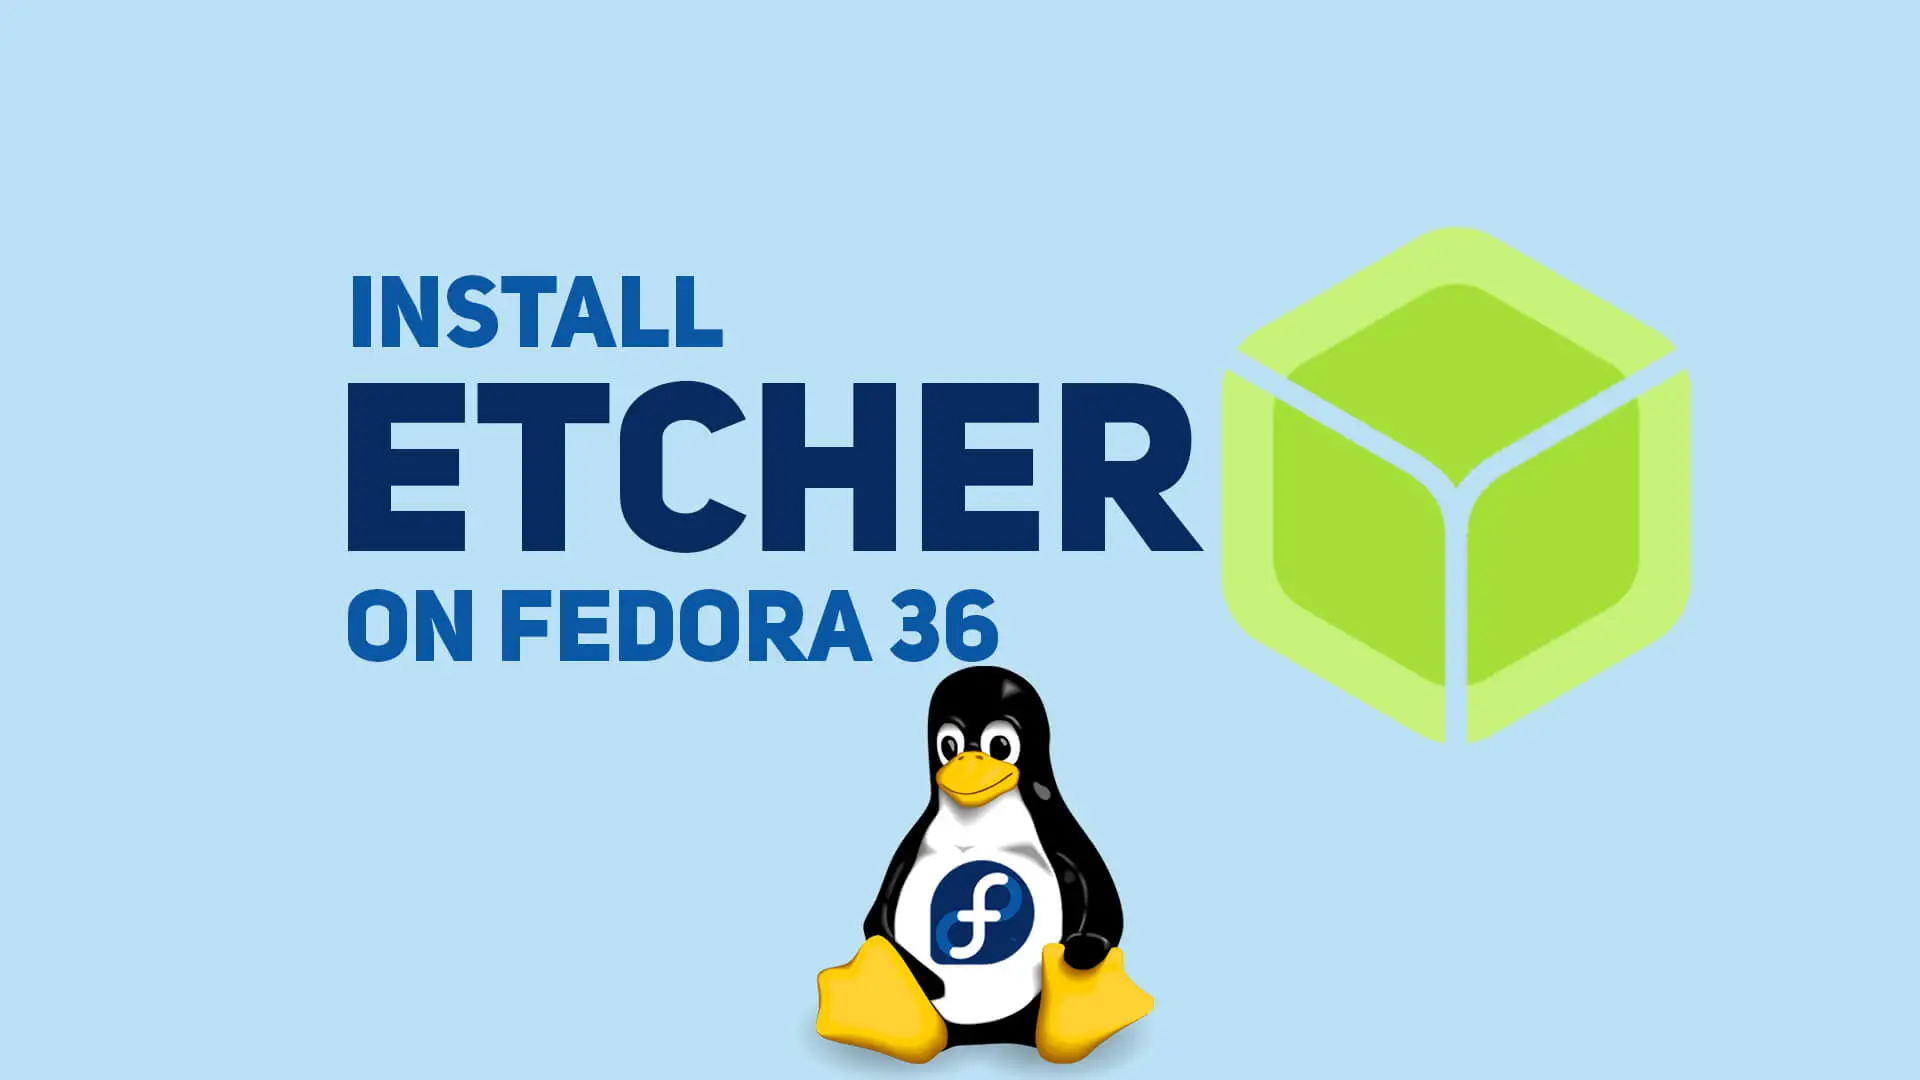 Install Etcher on Fedora 36